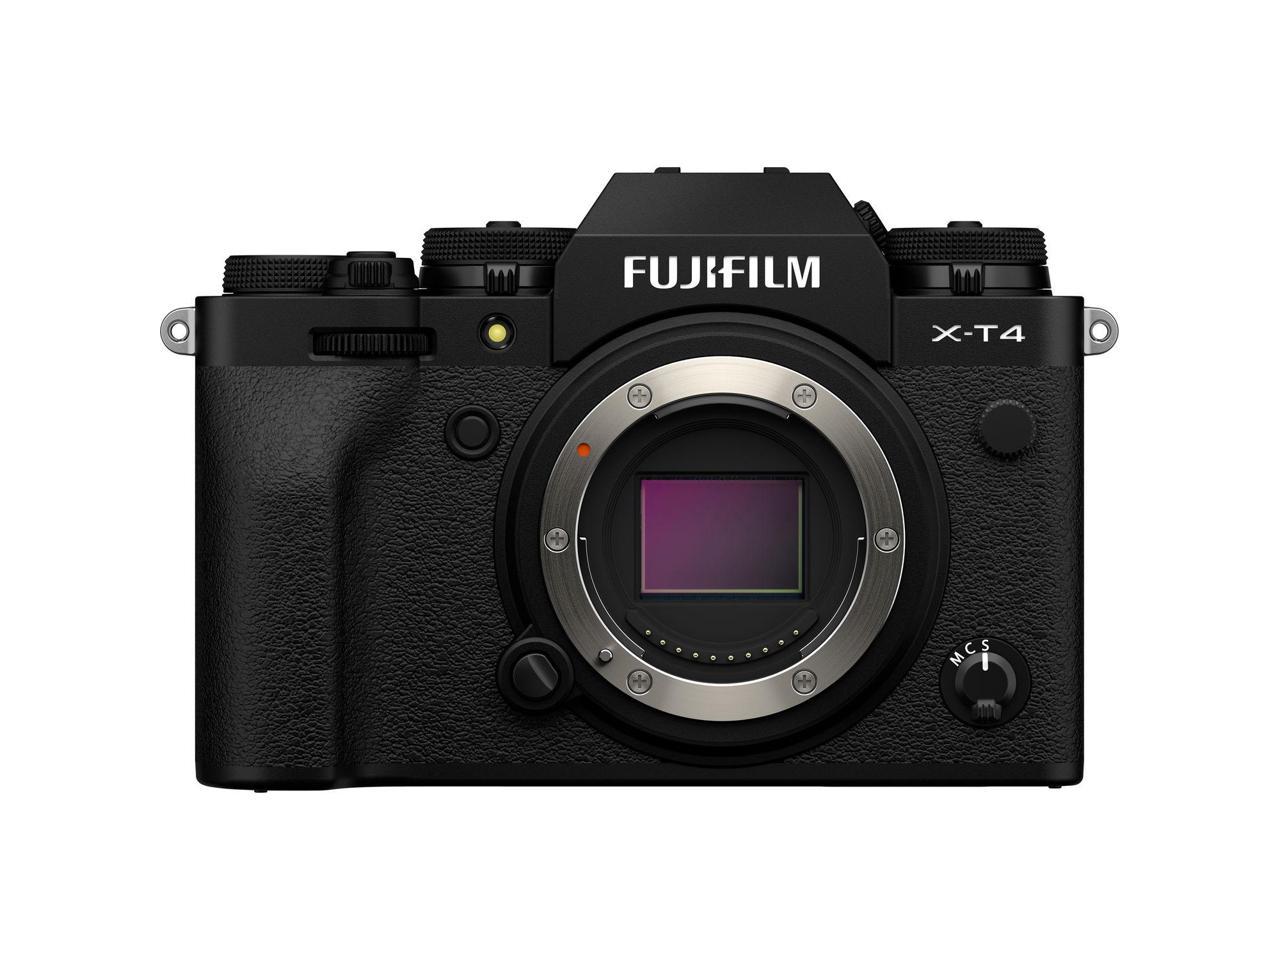 Fujifilm X-T4 Mirrorless Digital Camera Body, #16652855 - Newegg.com